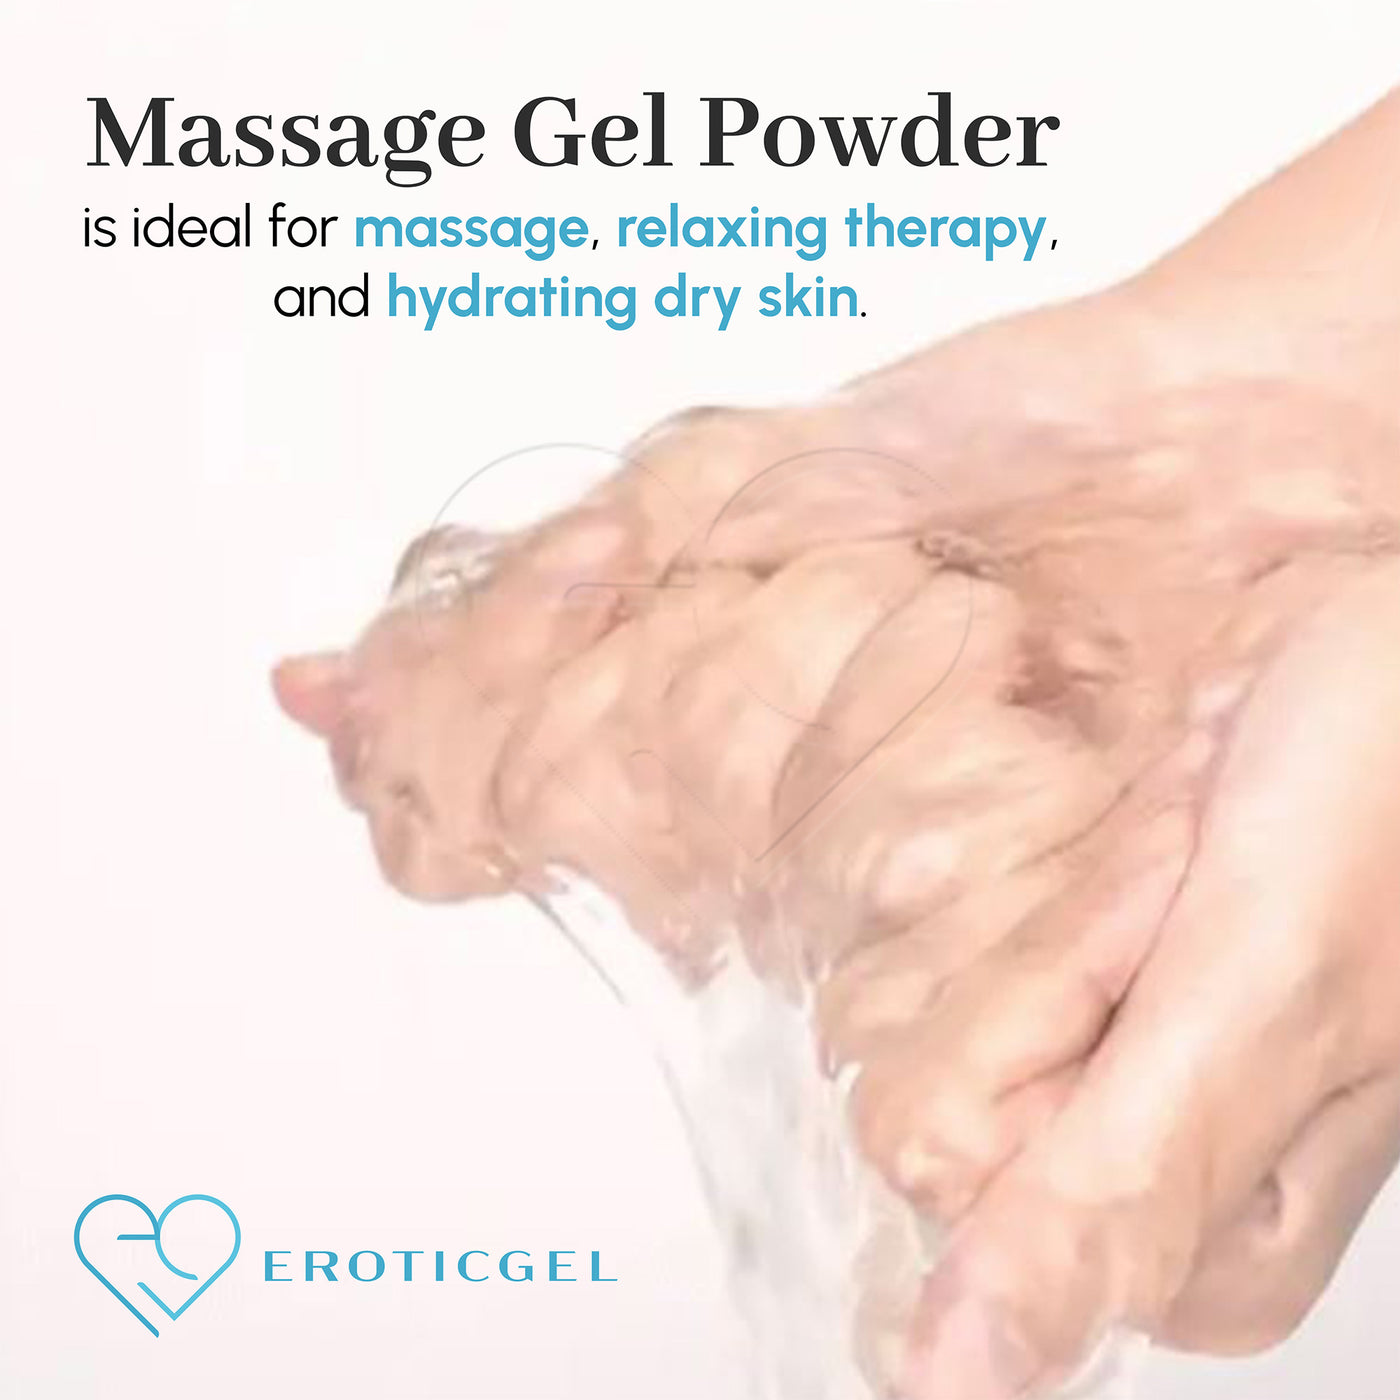 Eroticgel Nuru Massage Gel Powder - Seaweed and Green Tea Extract